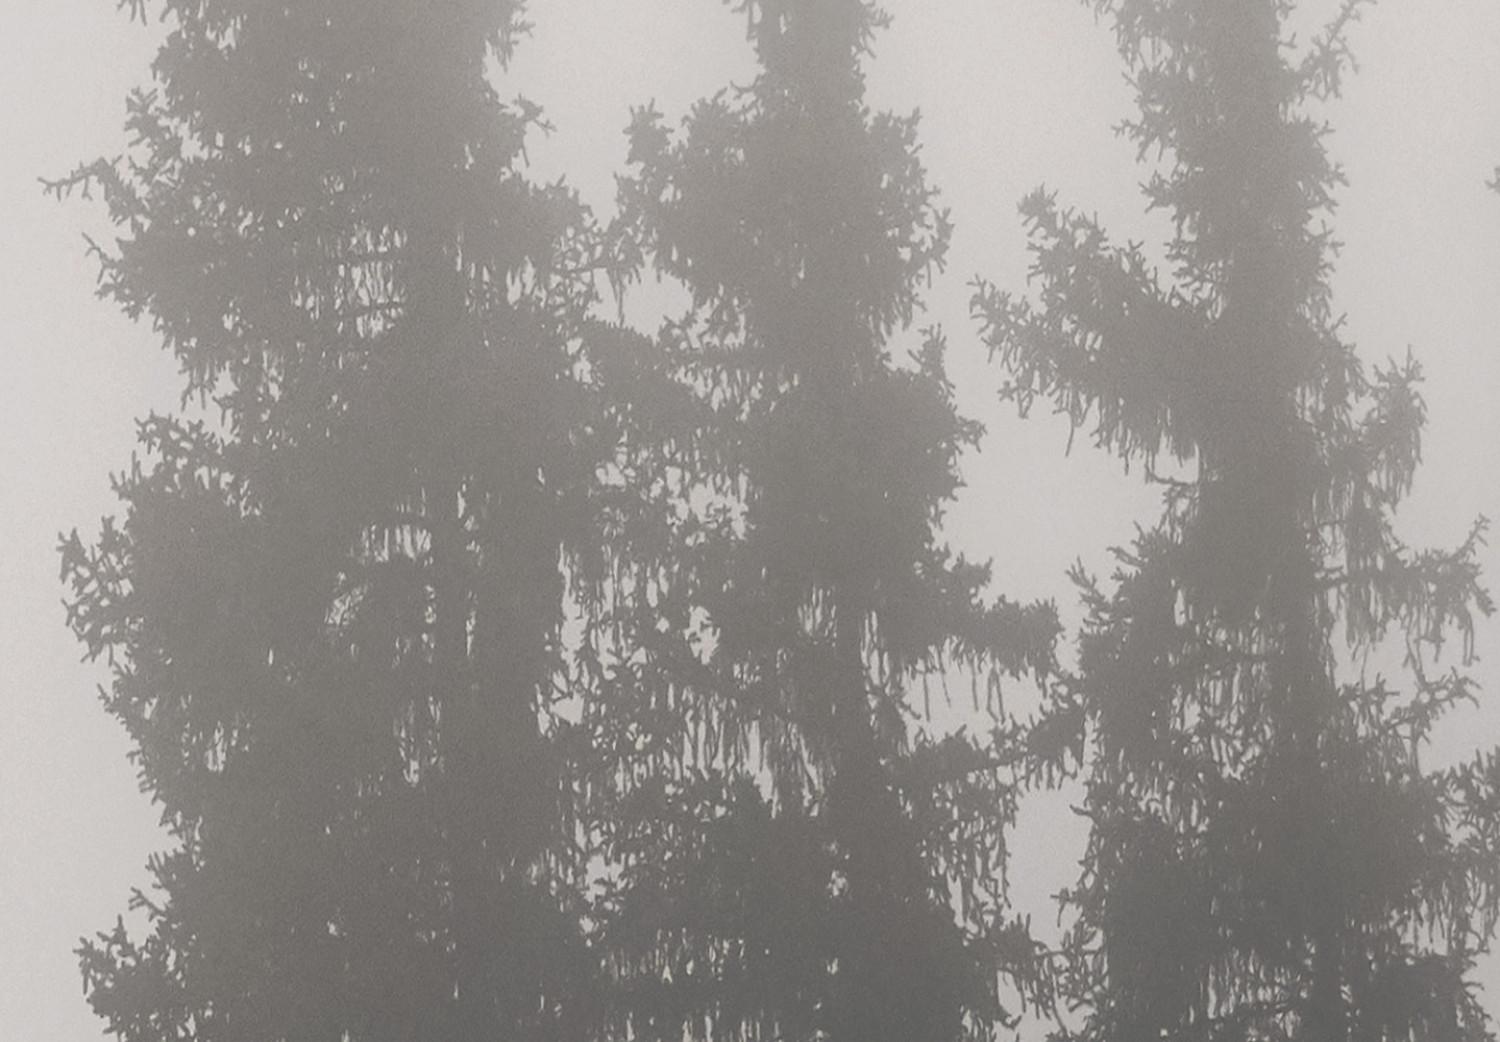 Póster Aroma de niebla boscosa - árboles de abeto, niebla